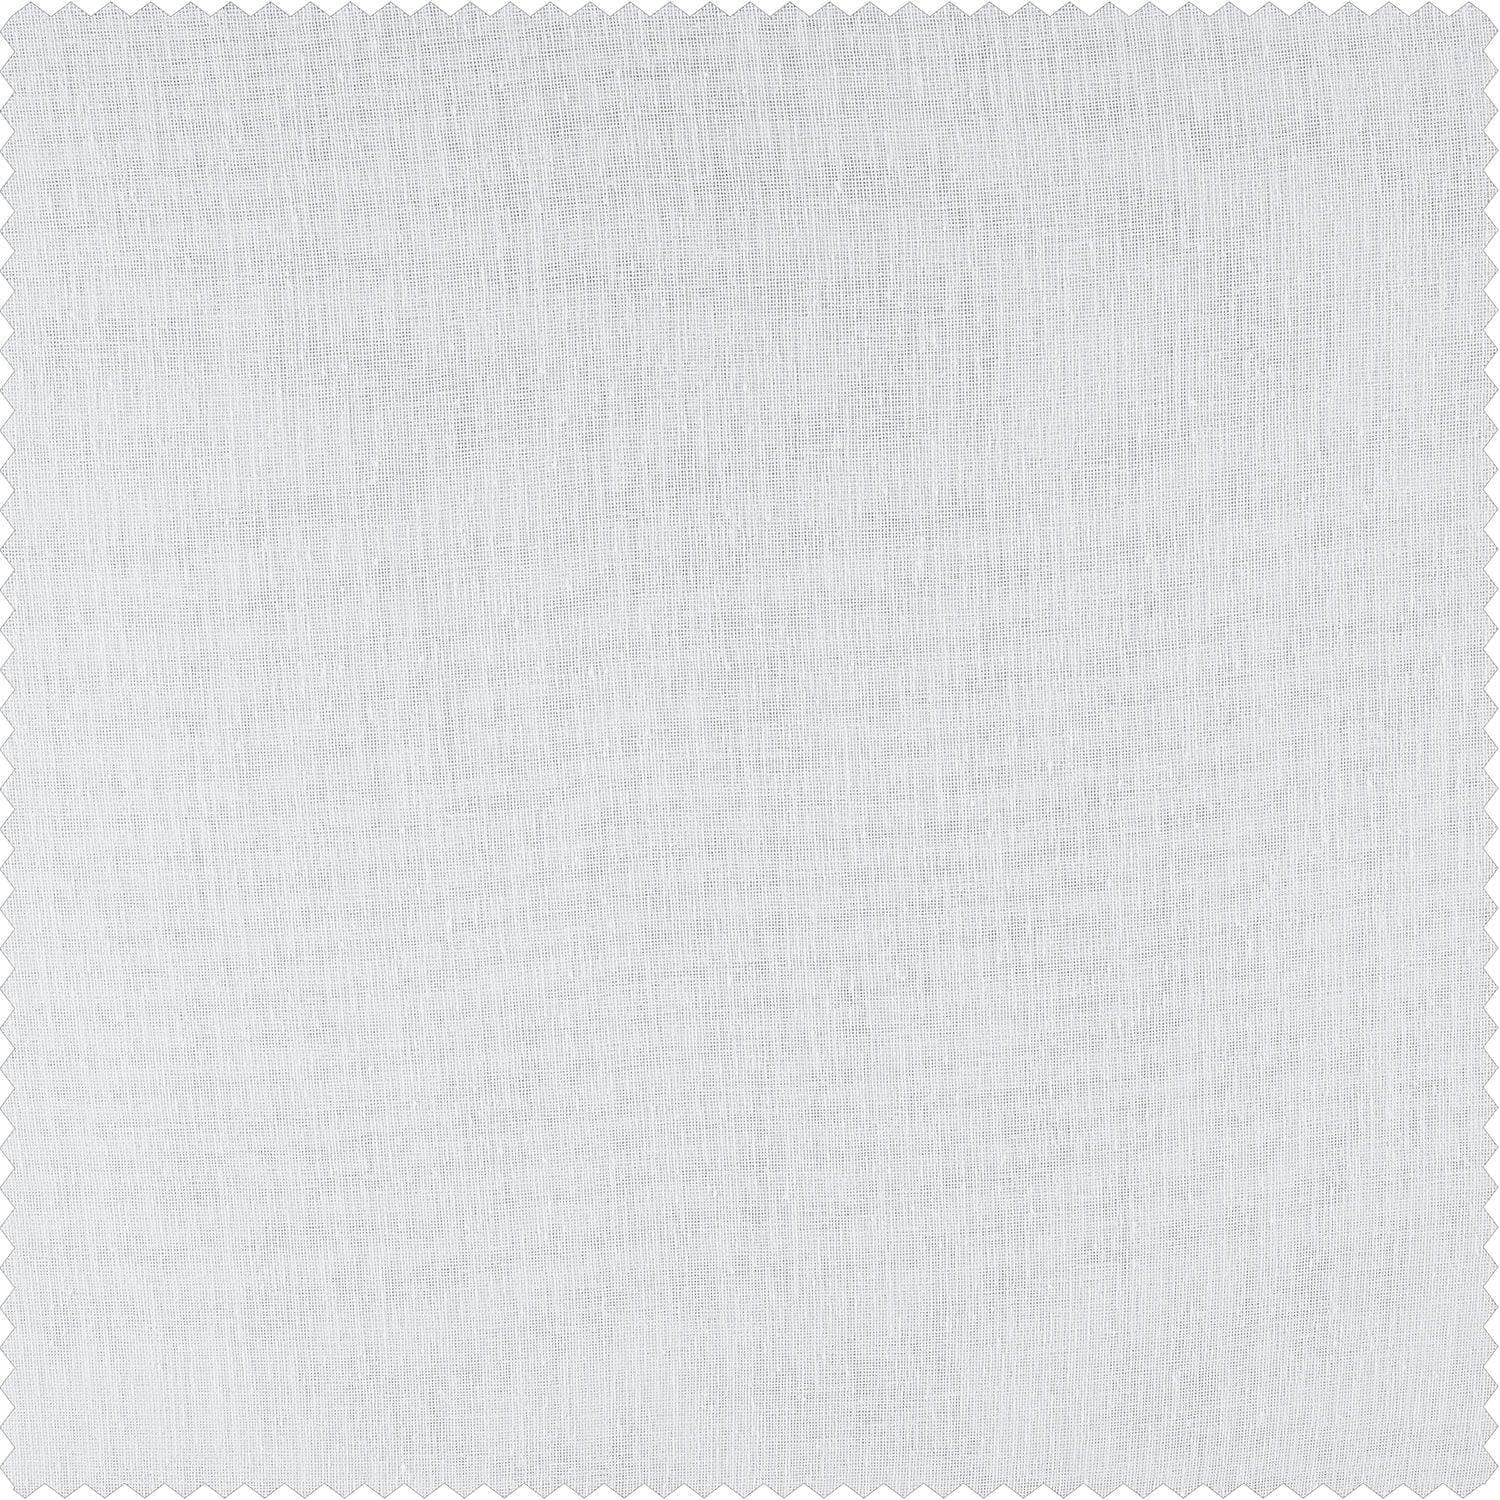 Aspen White Textured Faux Linen Sheer Curtain